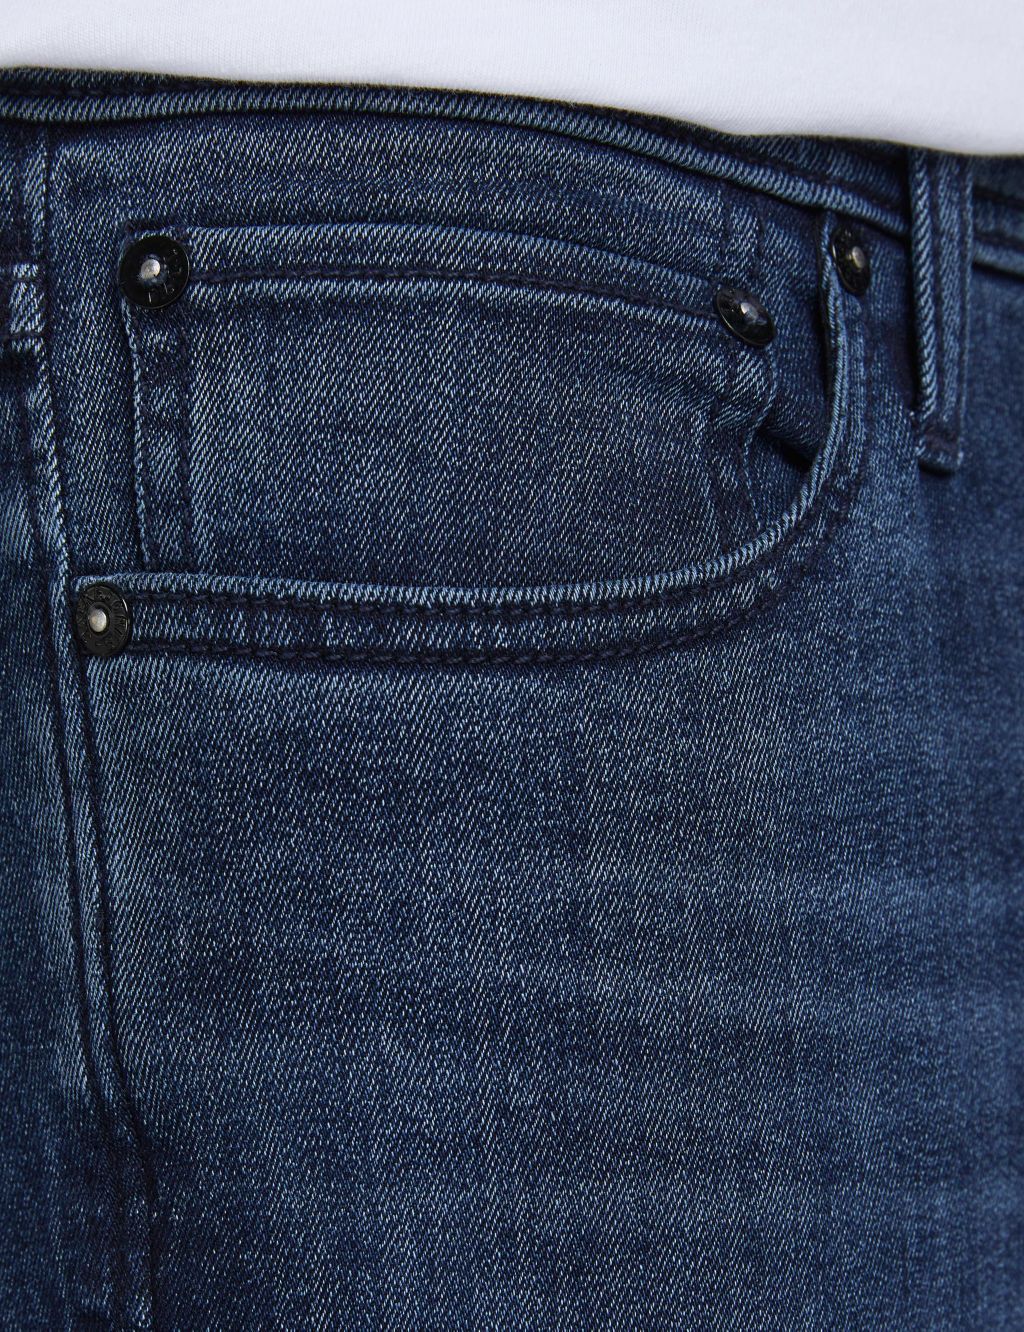 Slim Fit Stretch Jeans image 5